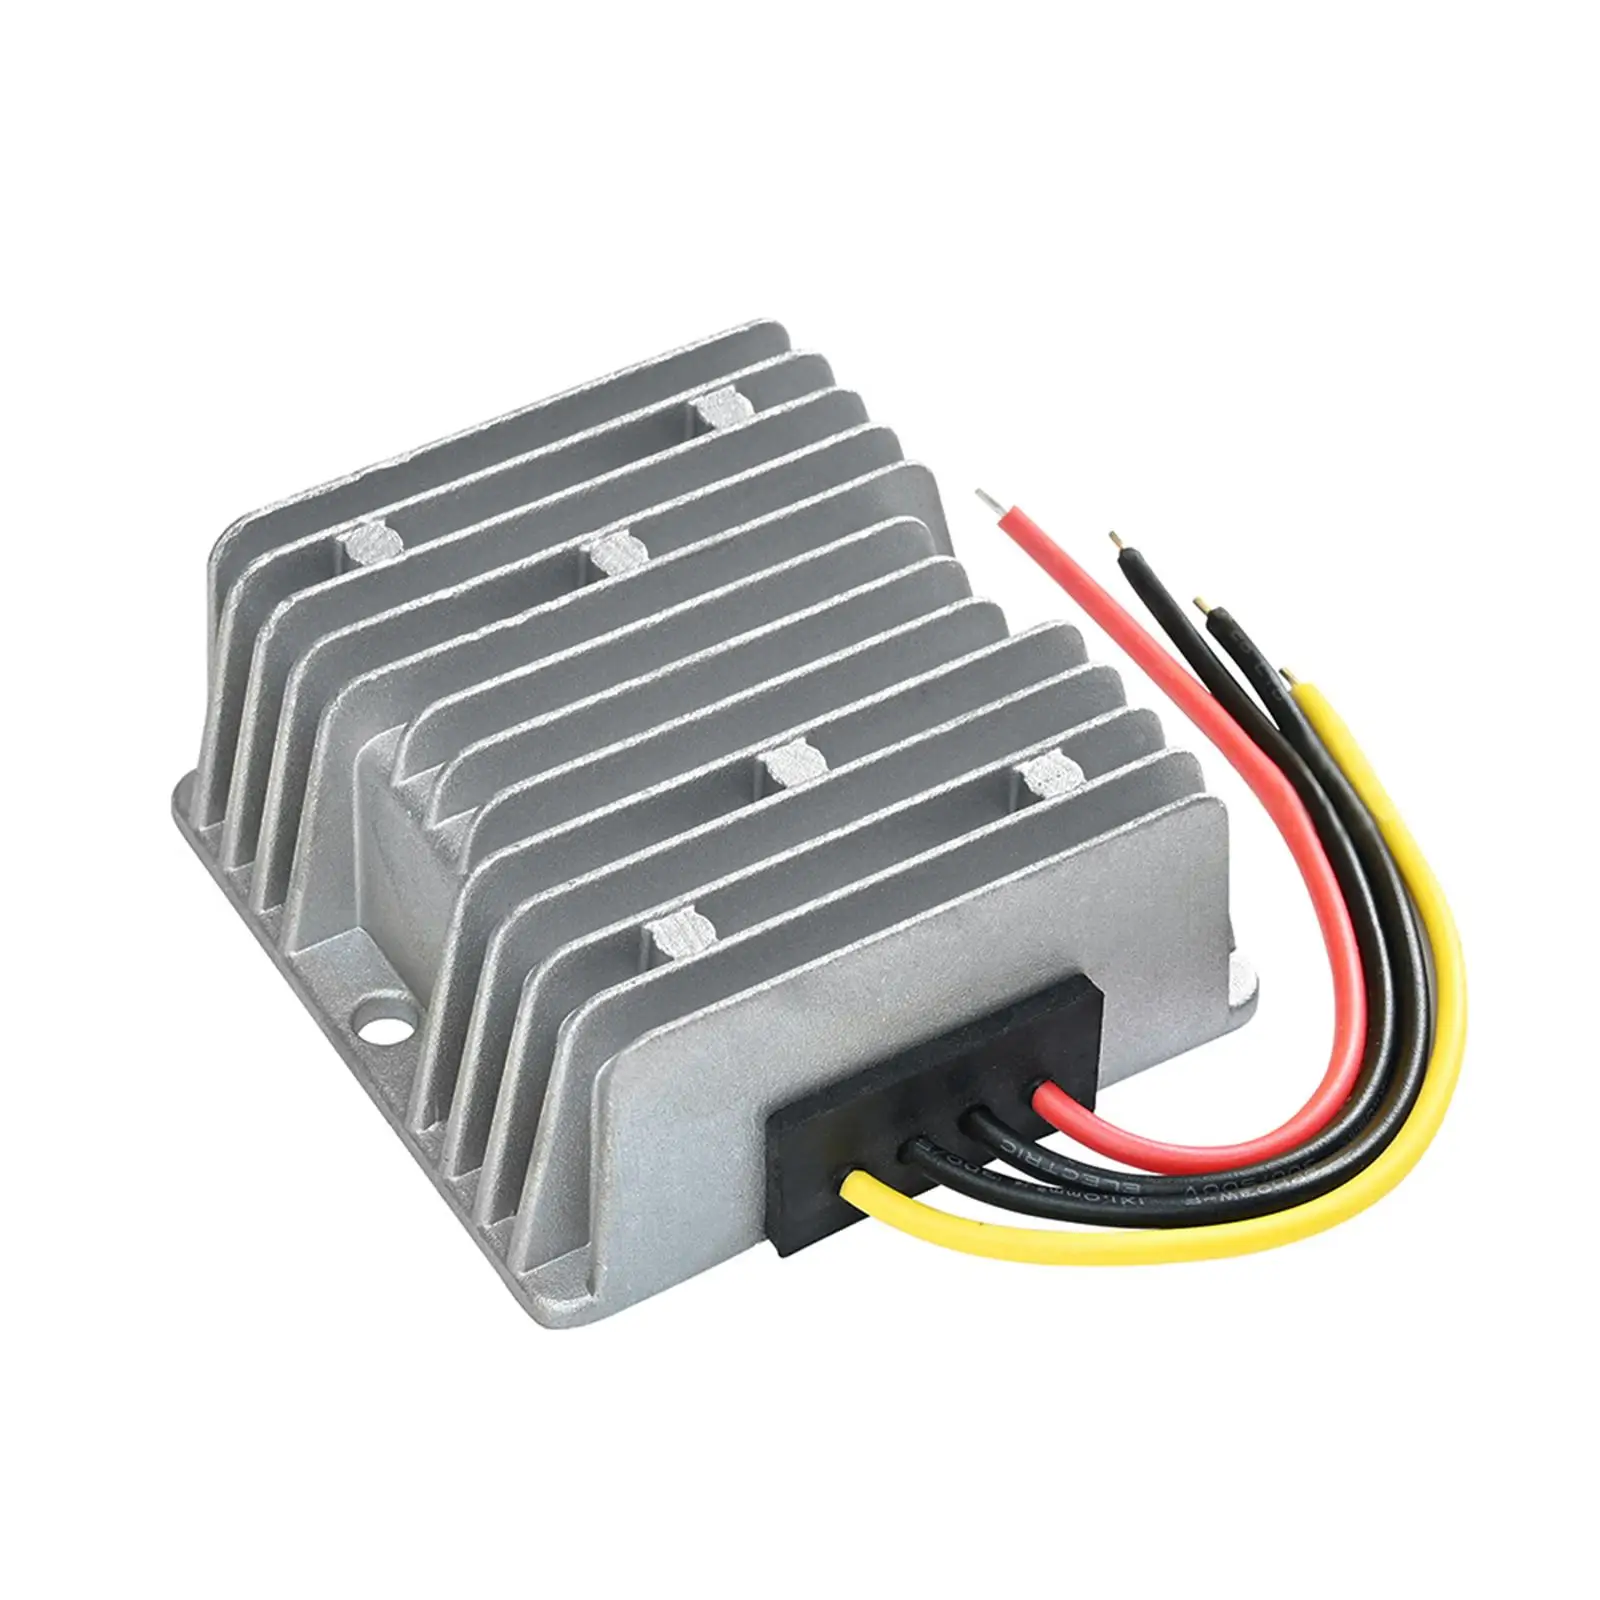 Converter Replaces Automatic Heat Dissipation IP68 Waterproof Voltage Regulator